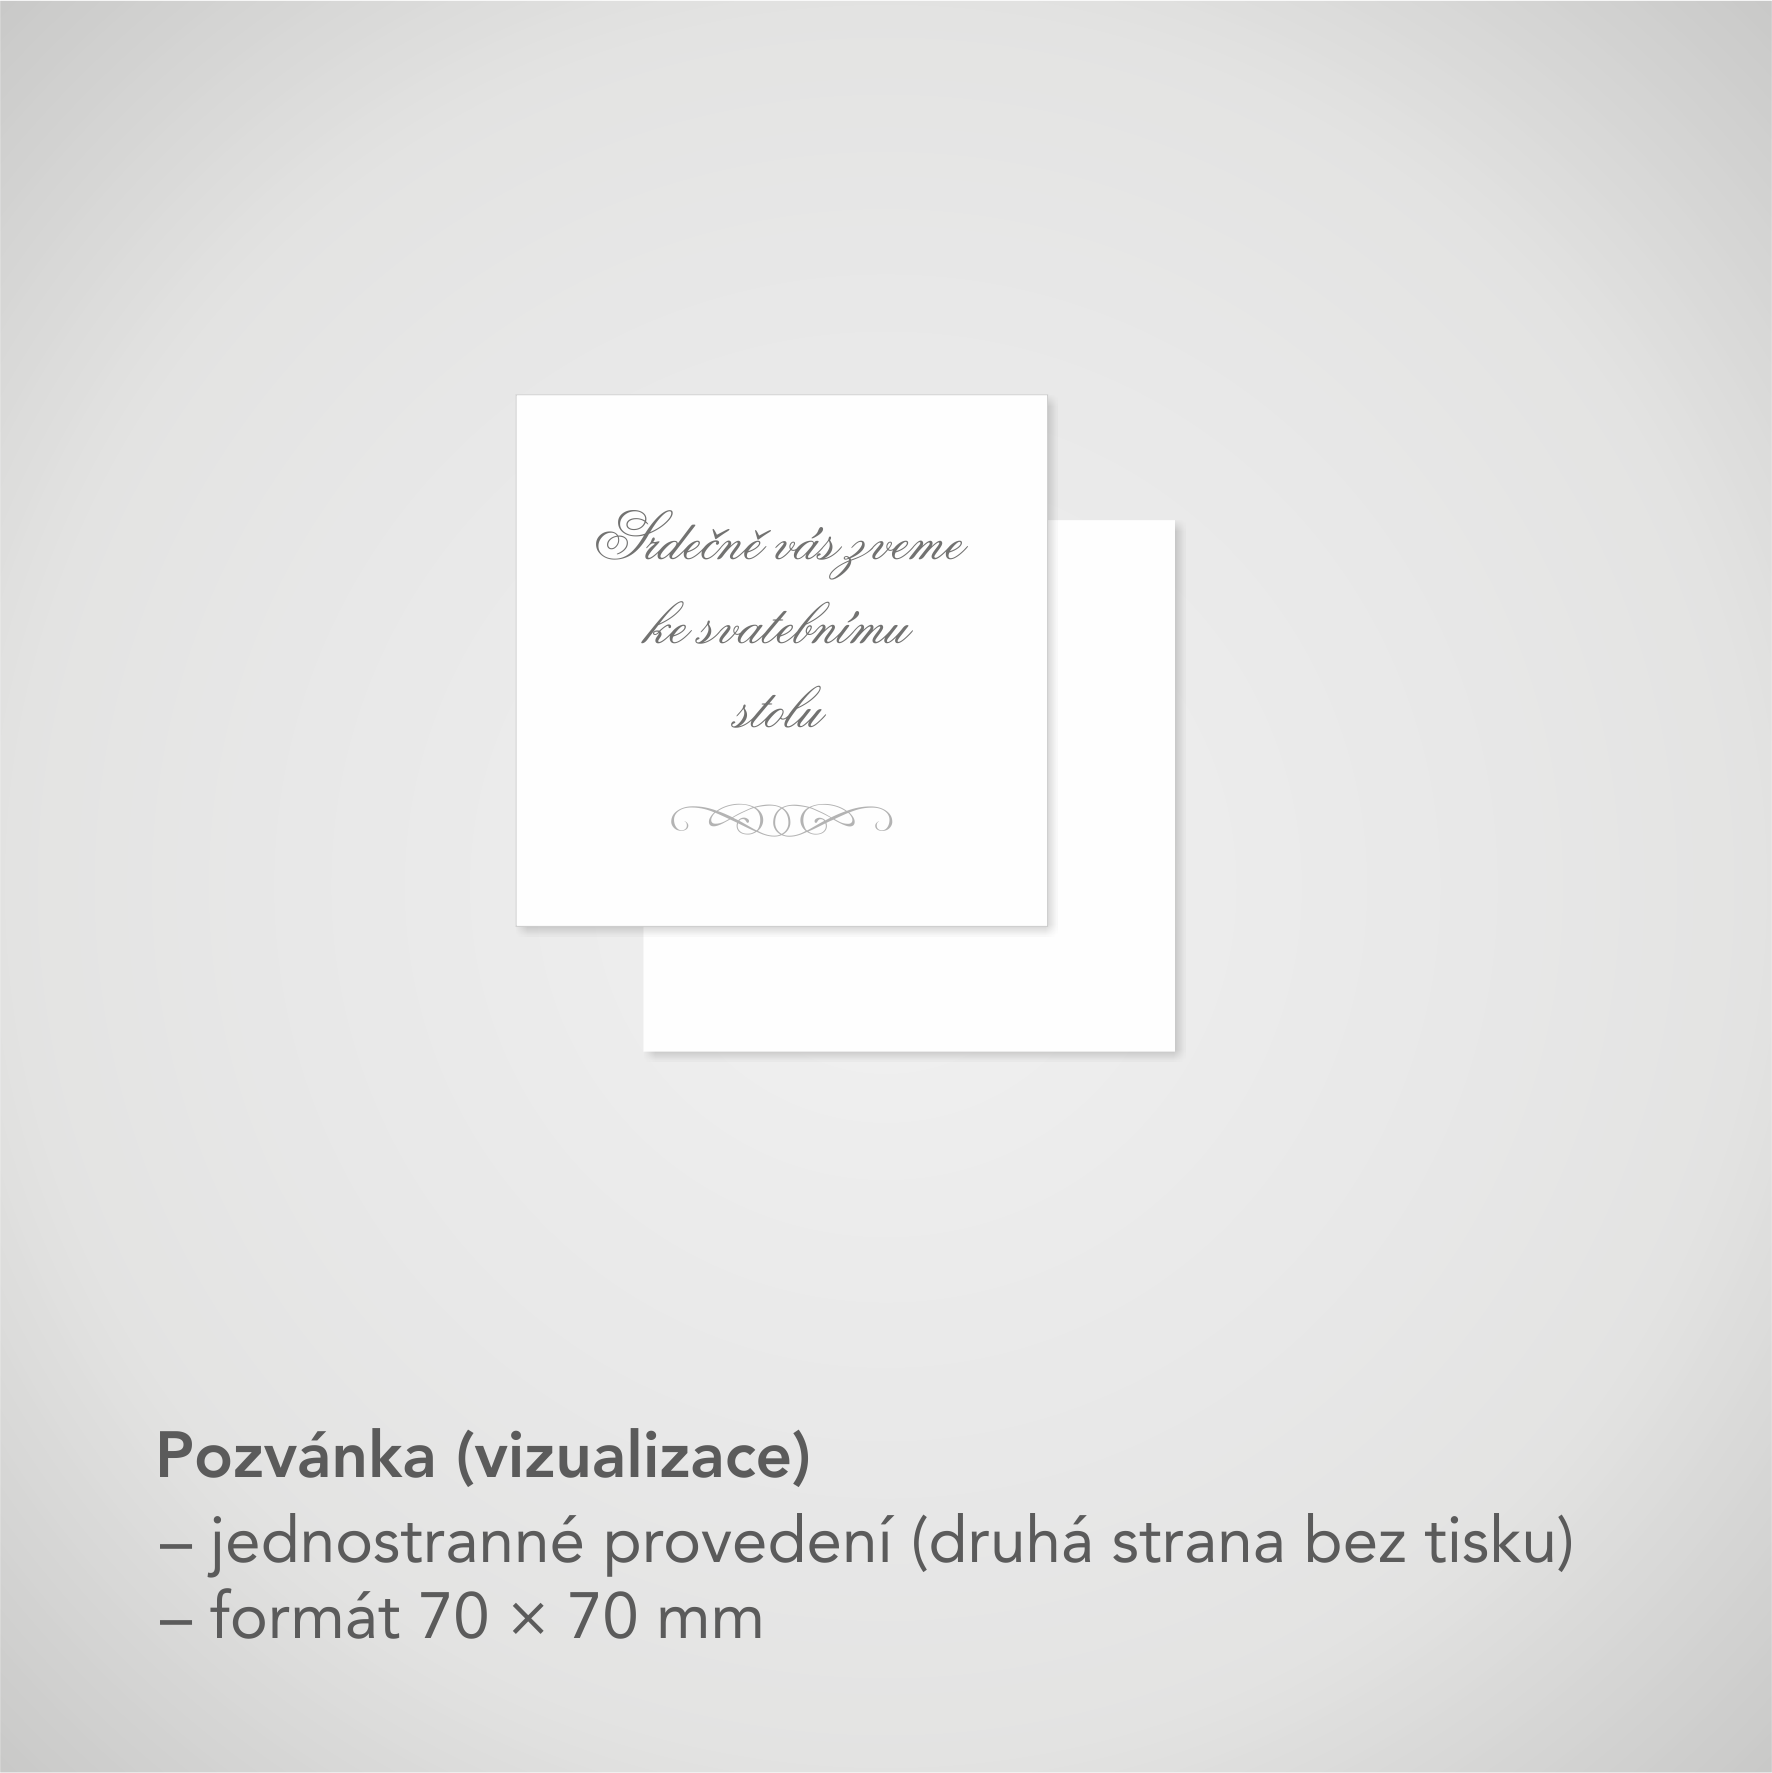 Pozvánka, informační karta – bílá perleť, čtvercová 70 × 70 mm, jednostranná